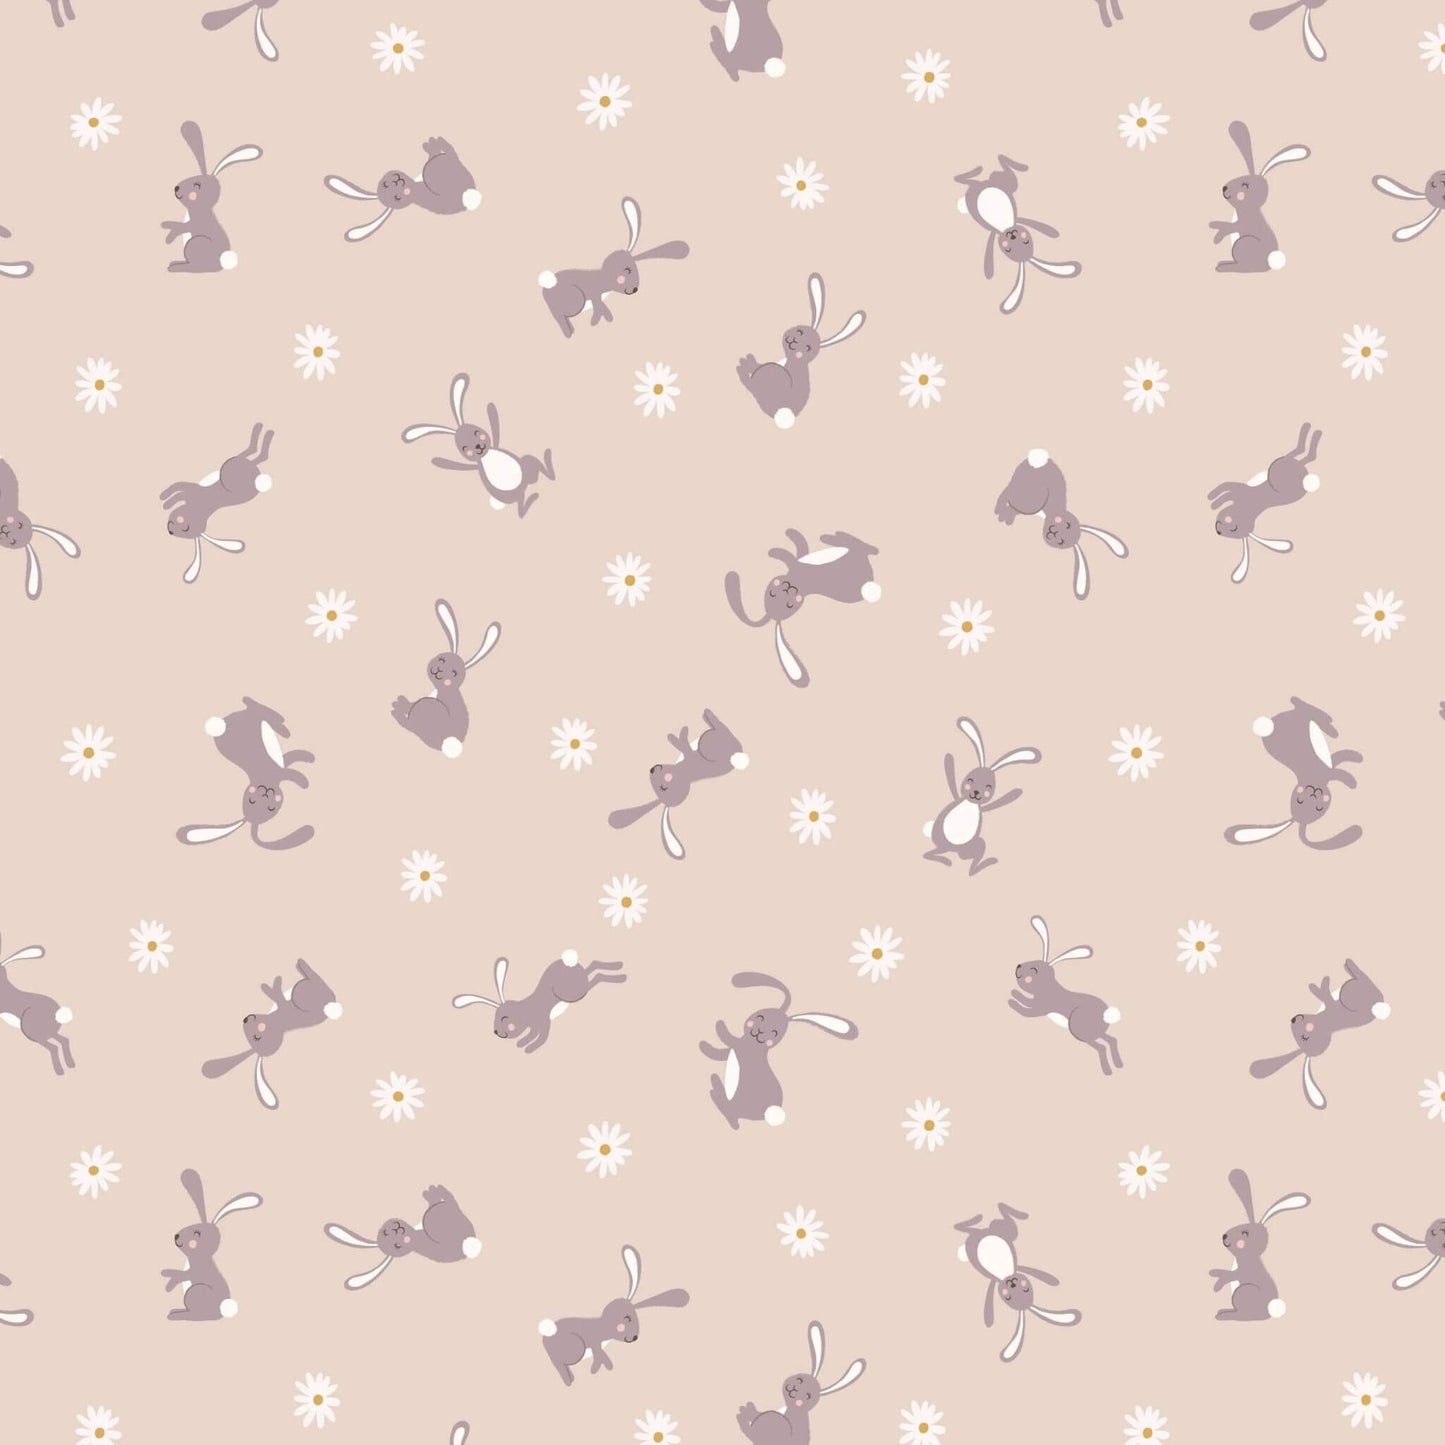 Bunny - Bunny Hop Fabric Range - Lewis and Irene - Dark Cream